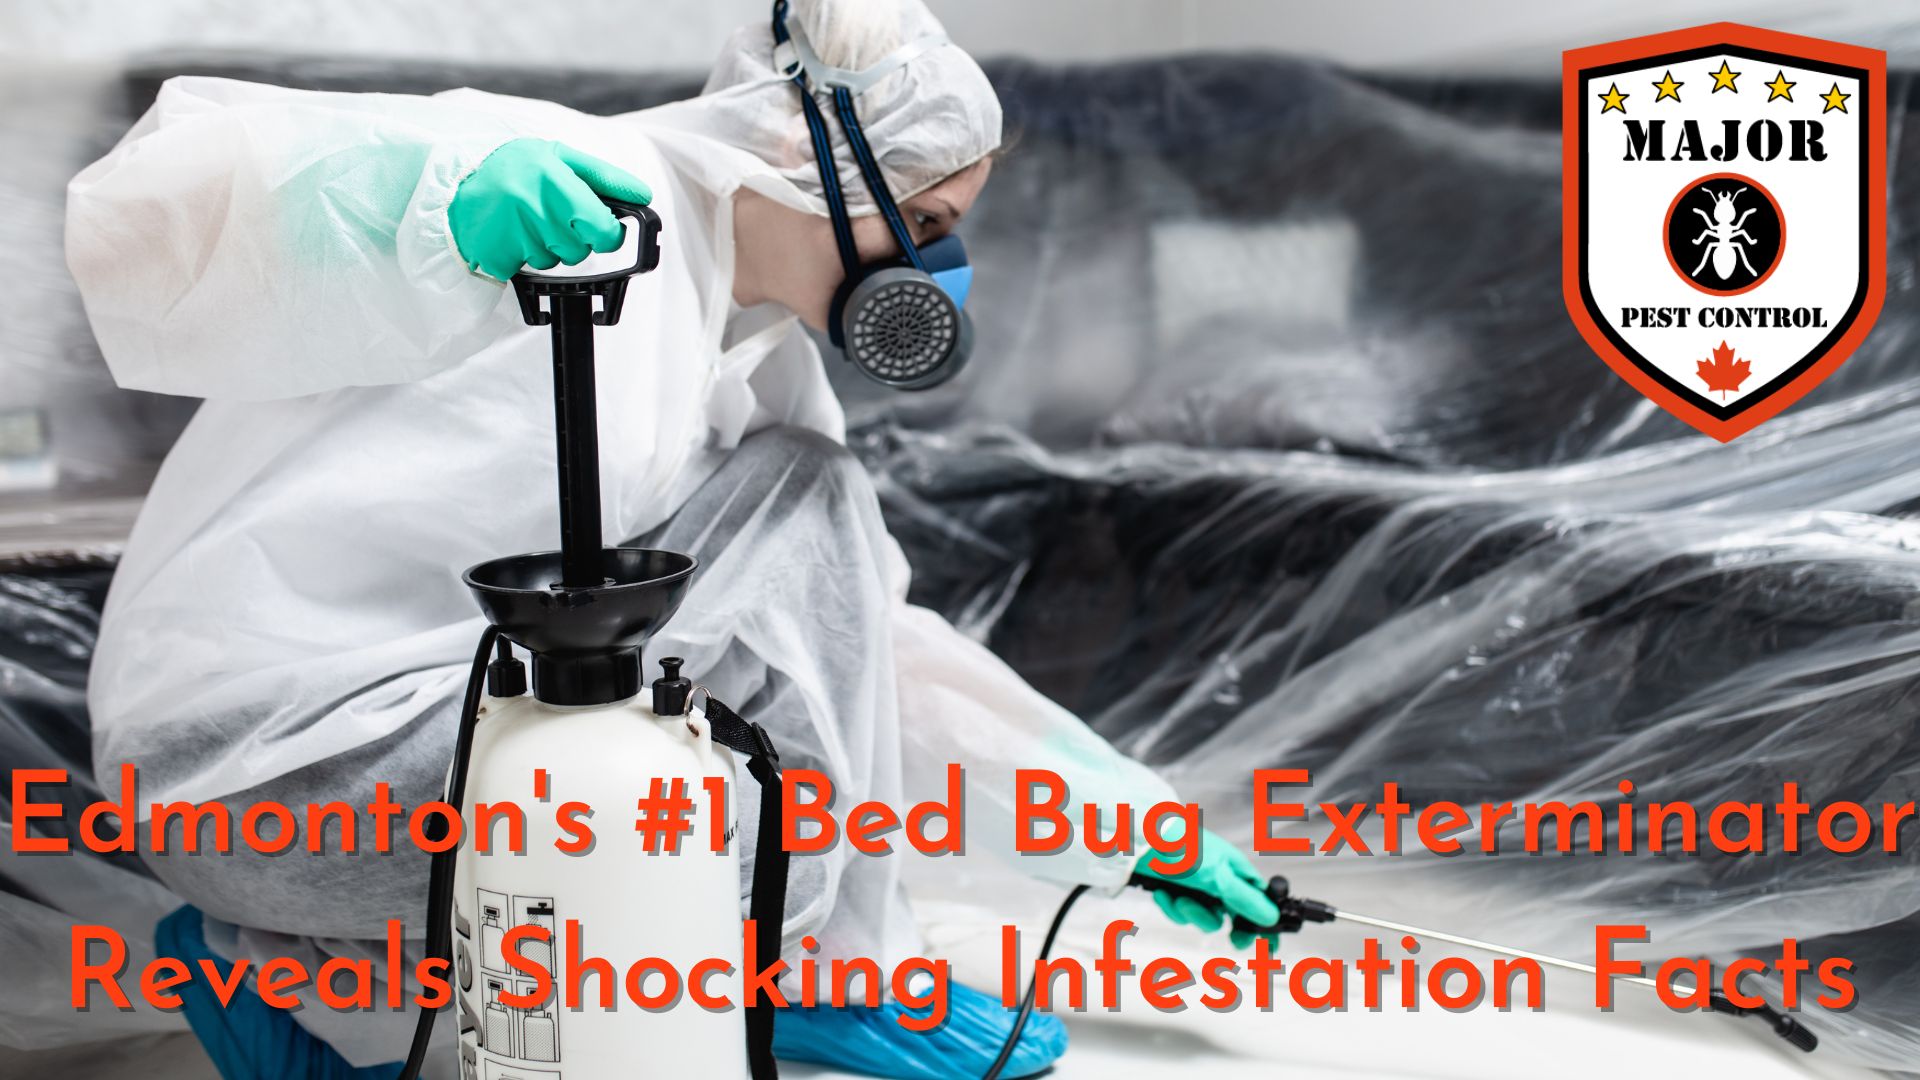 Edmonton's #1 Bed Bug Exterminator Reveals Shocking Infestation Facts